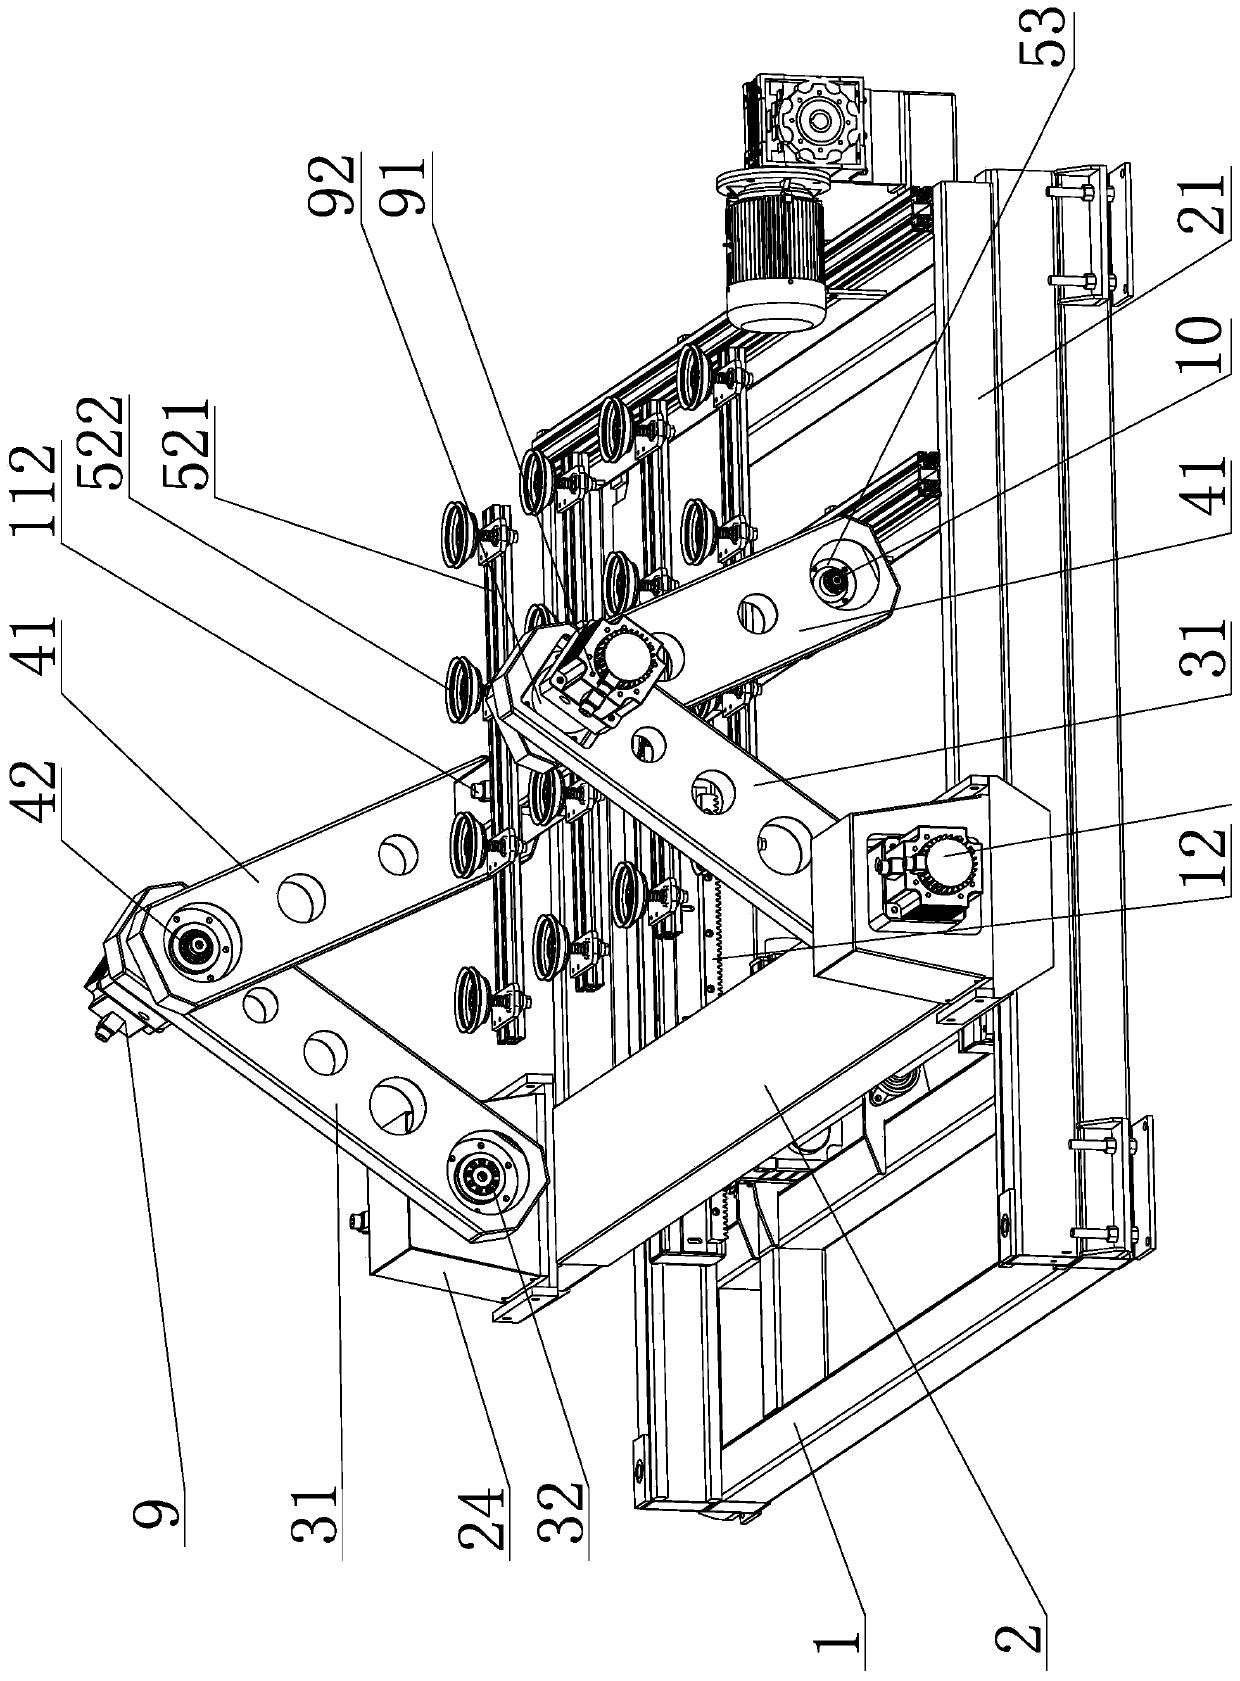 Three-bar oscillating mechanical arm for feeding and discharging glass